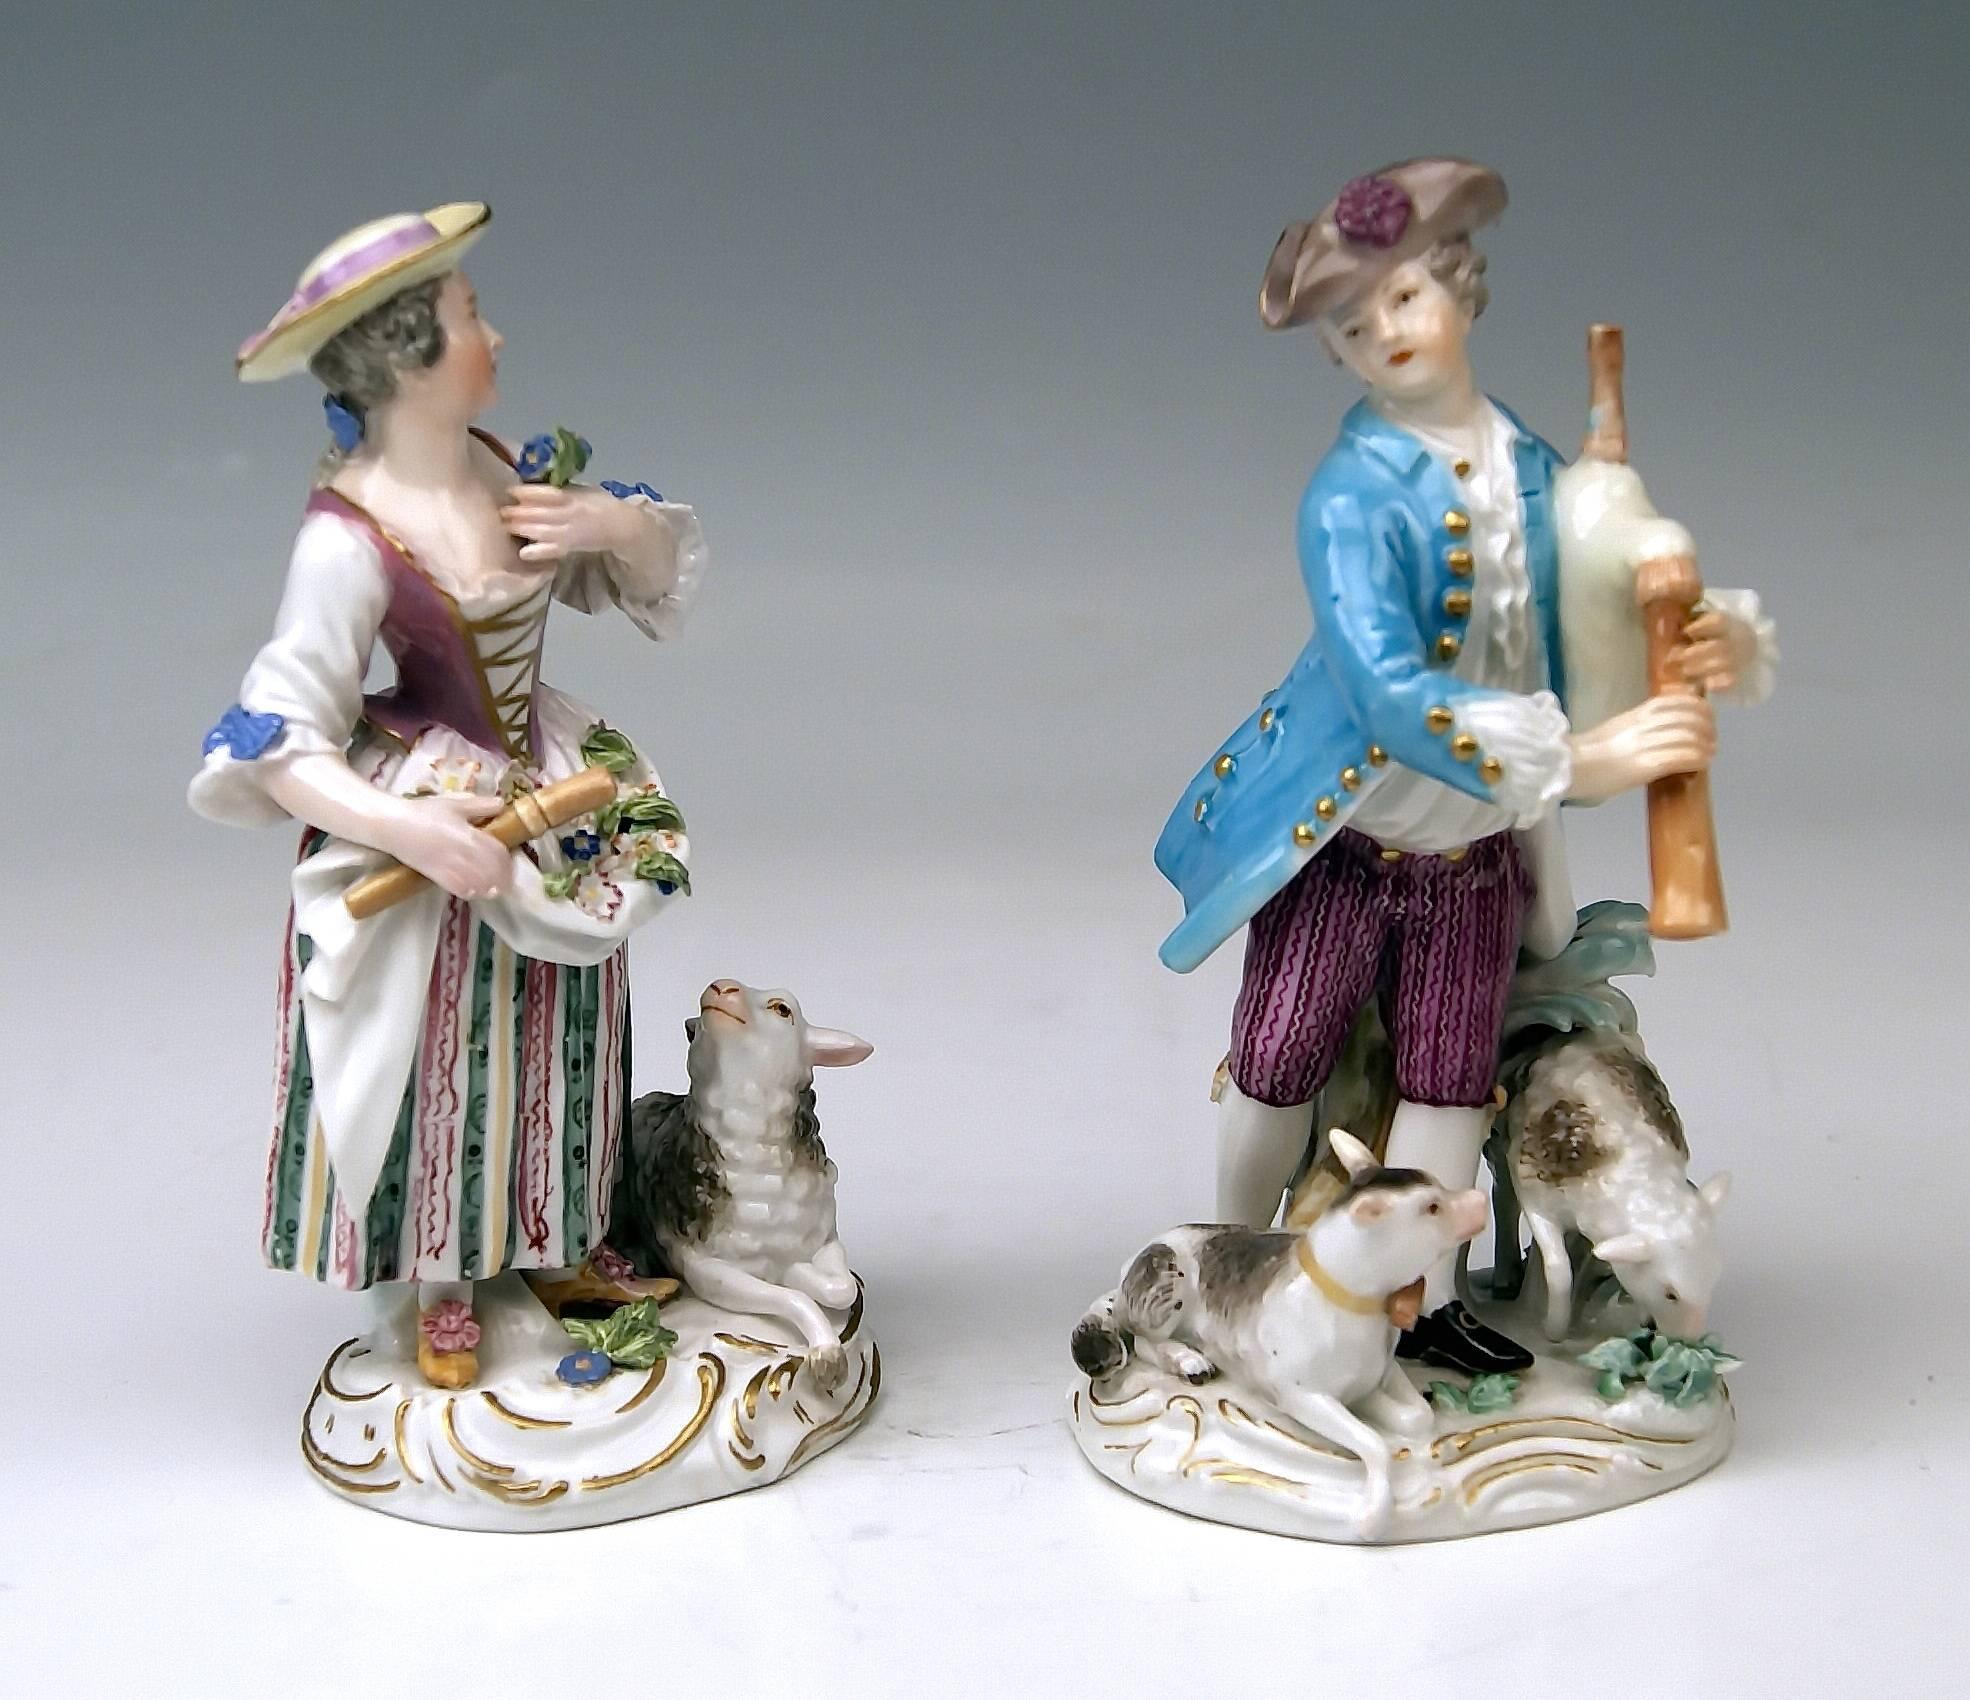 Meissen 18th century rare pair of figurines:   
Shepherd playing Bagpipes and Shepherdess with flute and sheep 
designed by Johann Joachim Kaendler   (model created circa 1761)
made during Rococo period   (circa 1763-1773)

Designer:
Johann Joachim